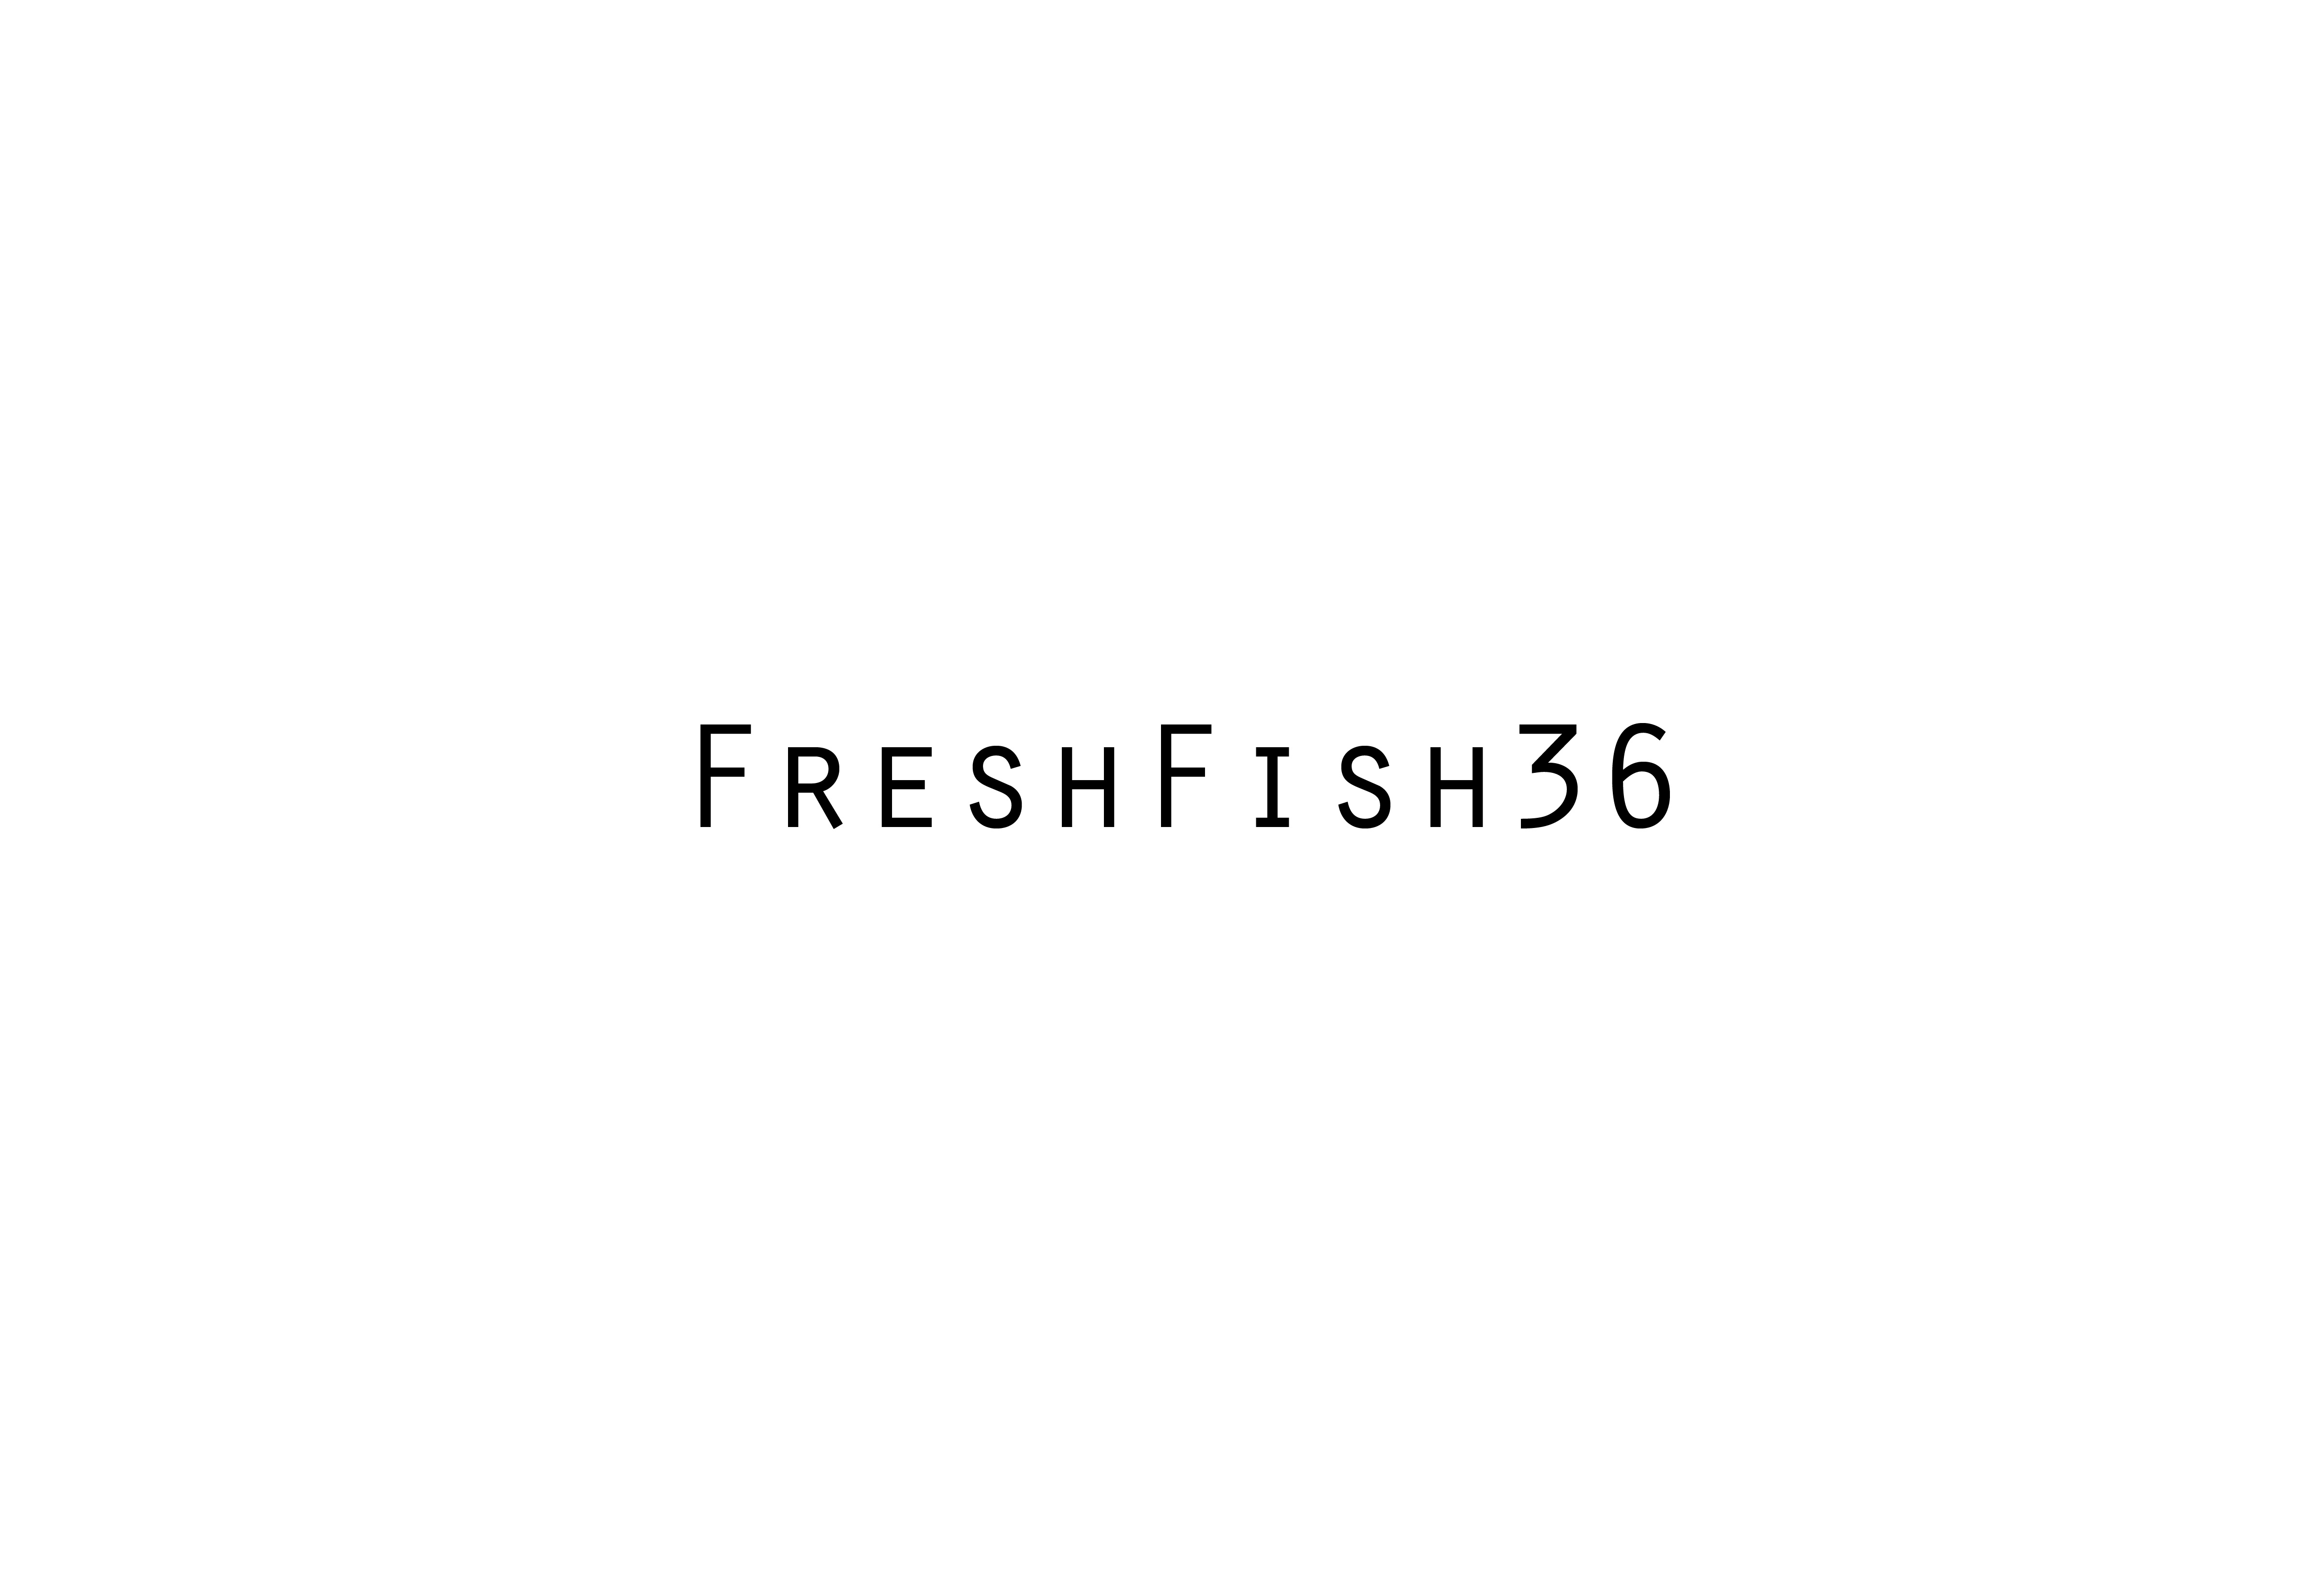 FreshFish36 